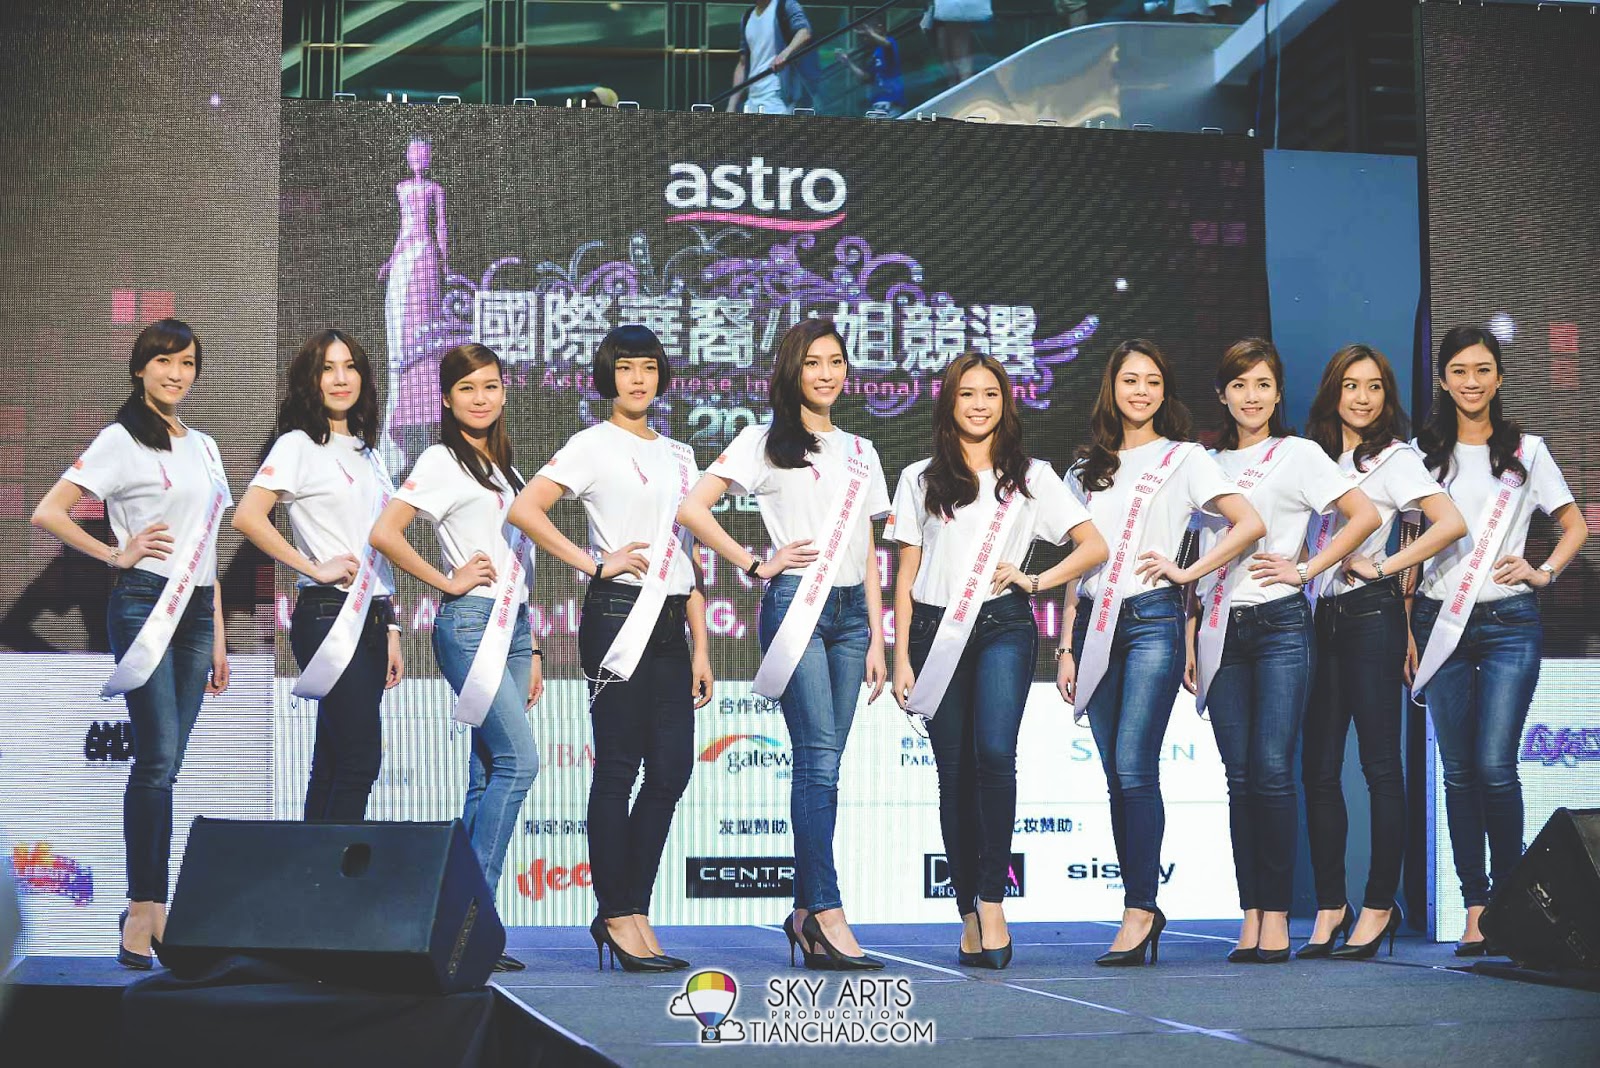 《Astro国际华裔小姐竞选2014》十强佳丽首度公开亮相会见媒体及观众